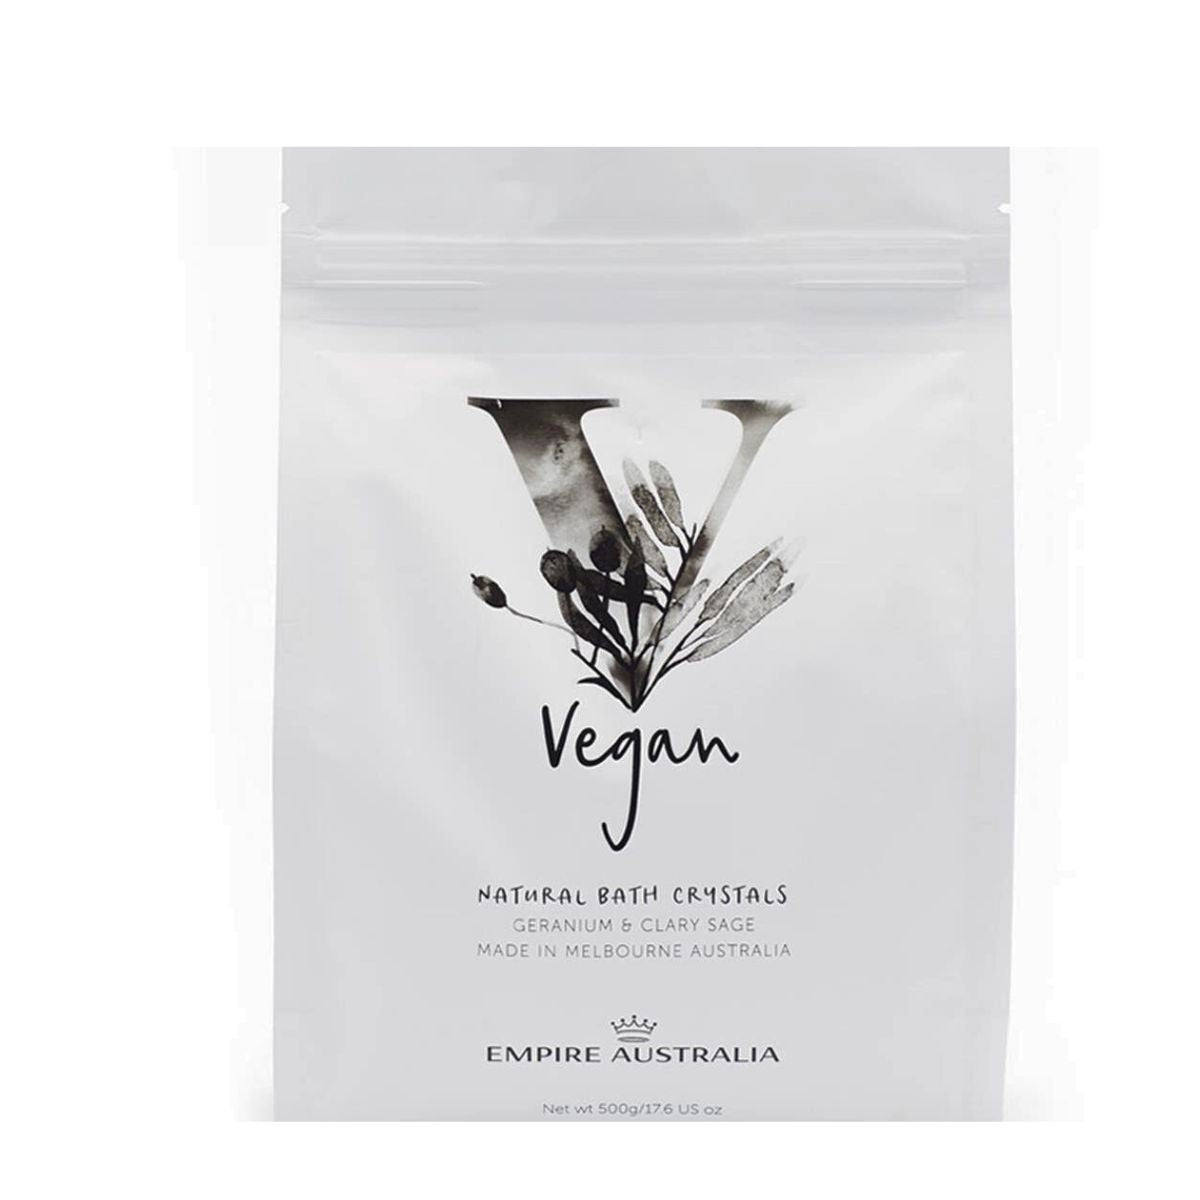 Vegan Geranium & Clary Sage Bath Crystals